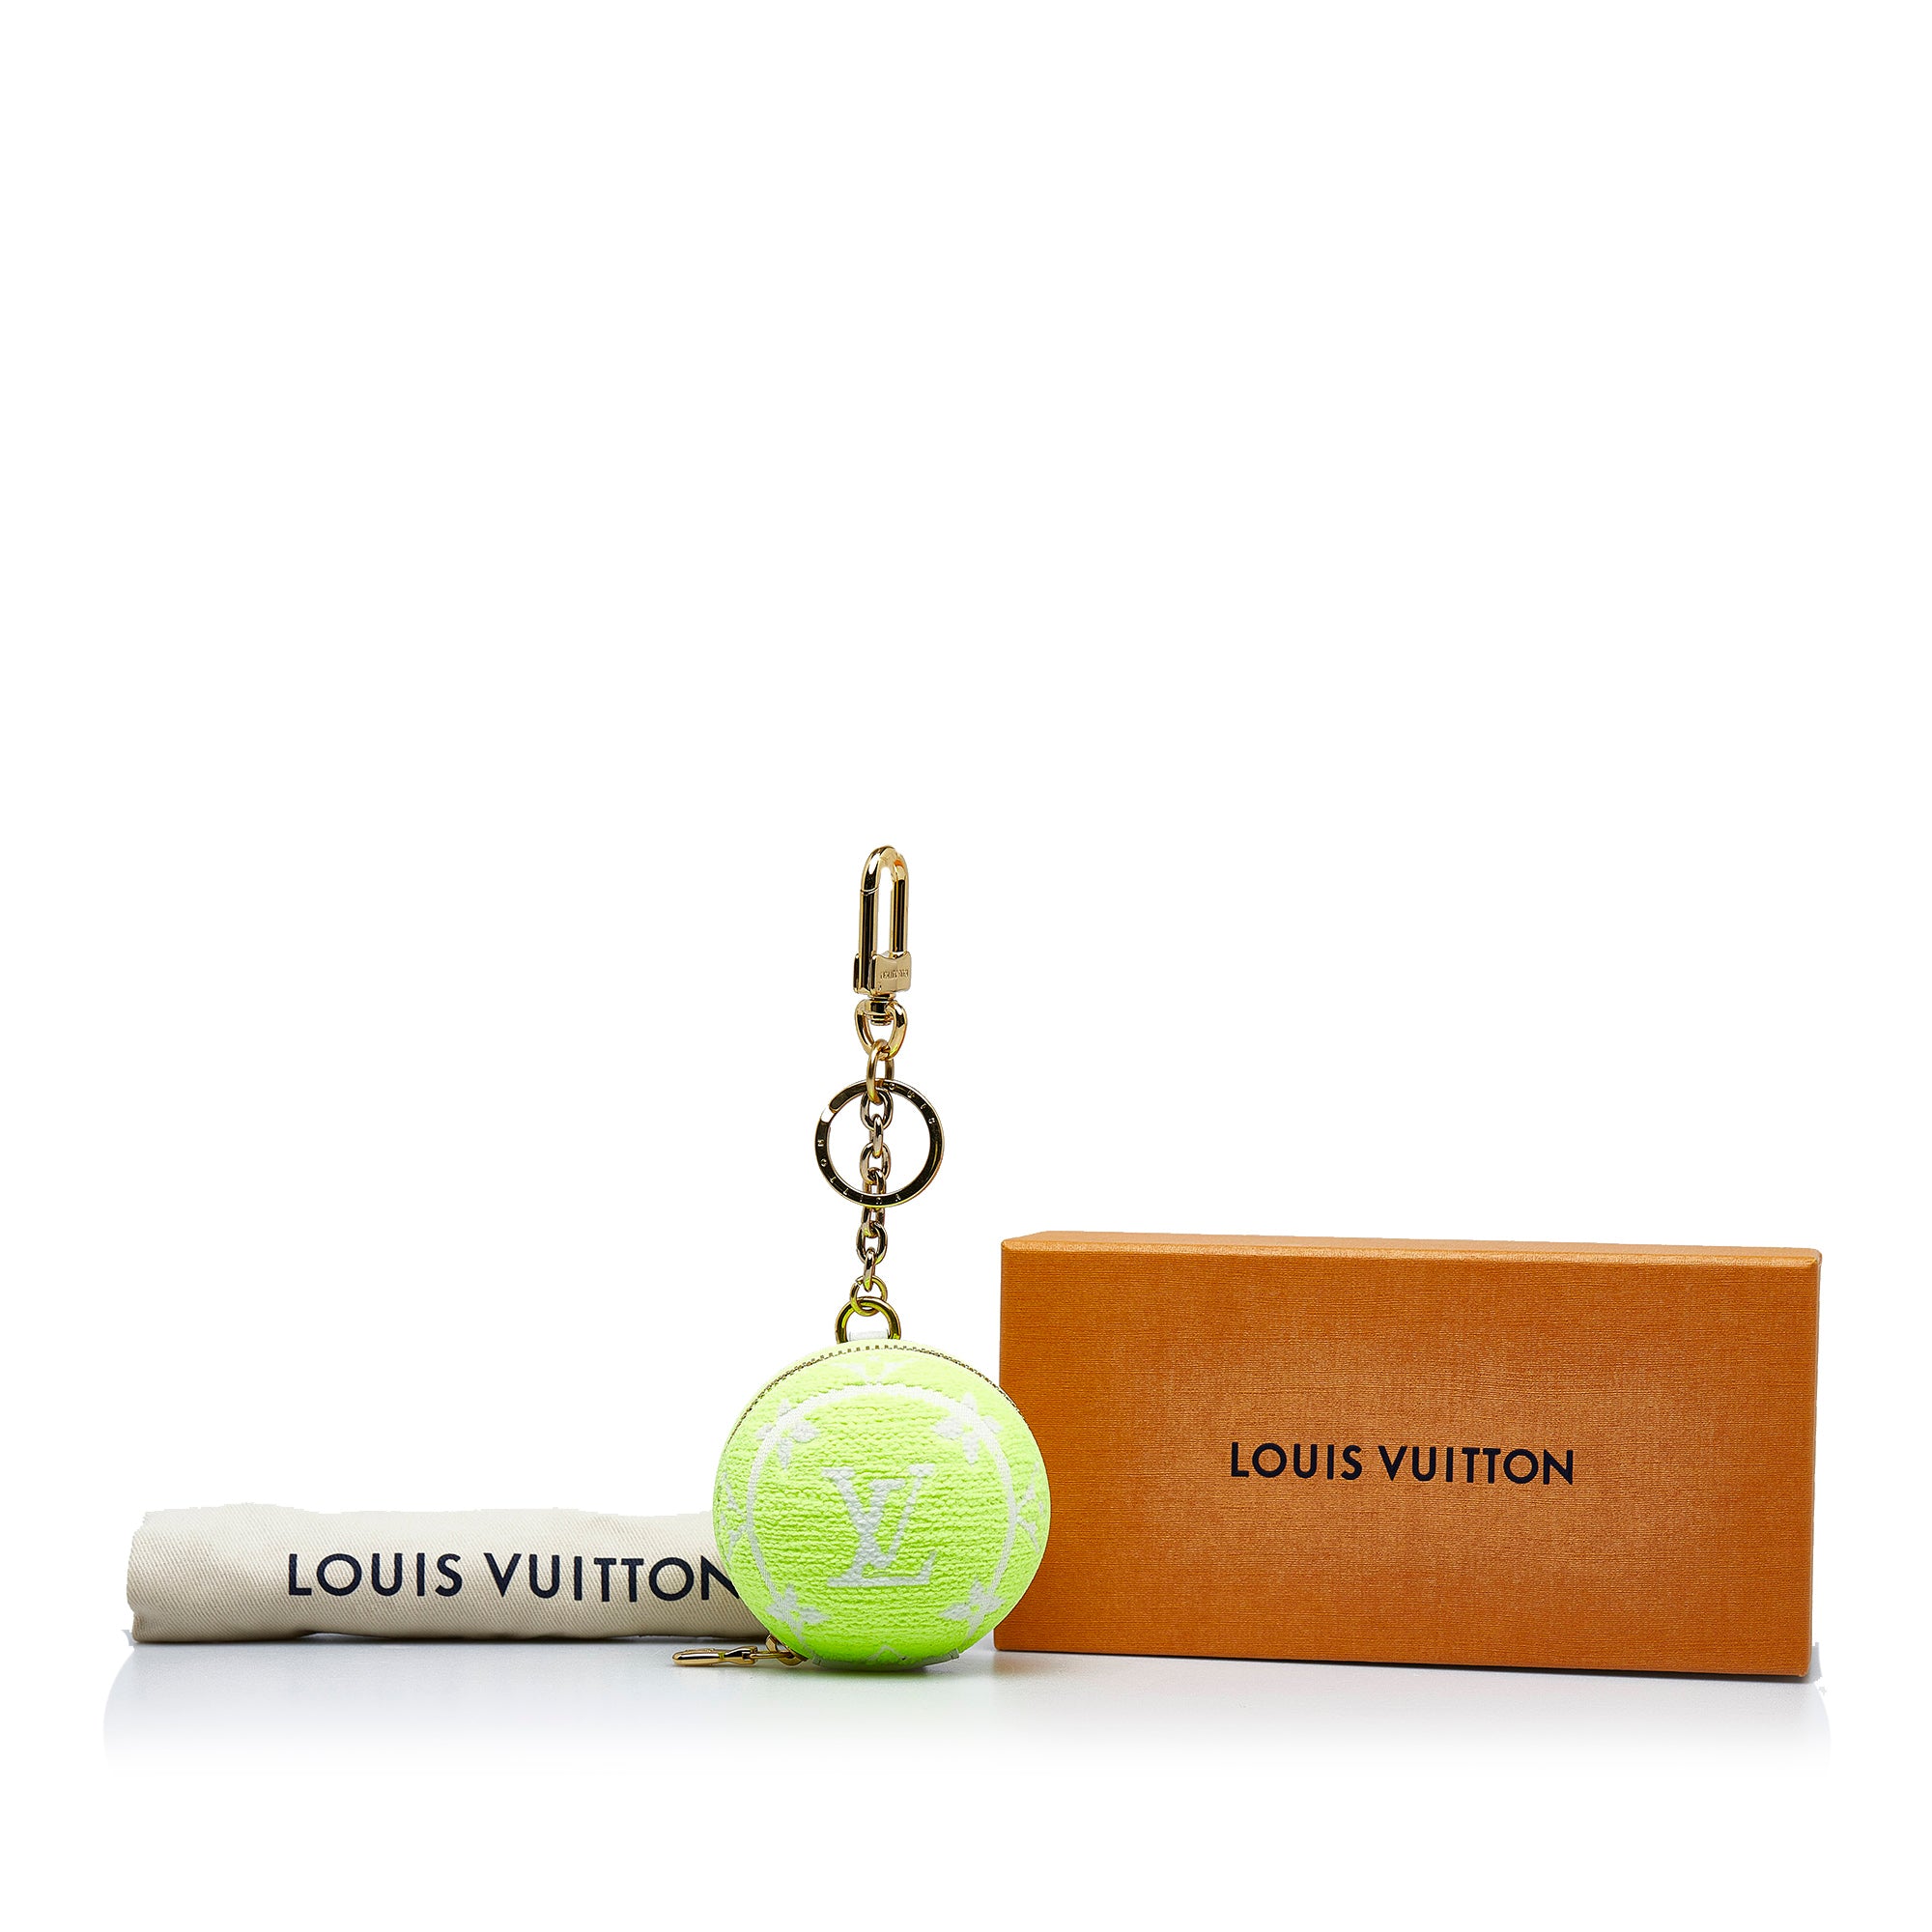 Shop Louis Vuitton in Stock Louis Vuitton Bag Charms Tennis ball type  (M00842) by KENRAN_Japan